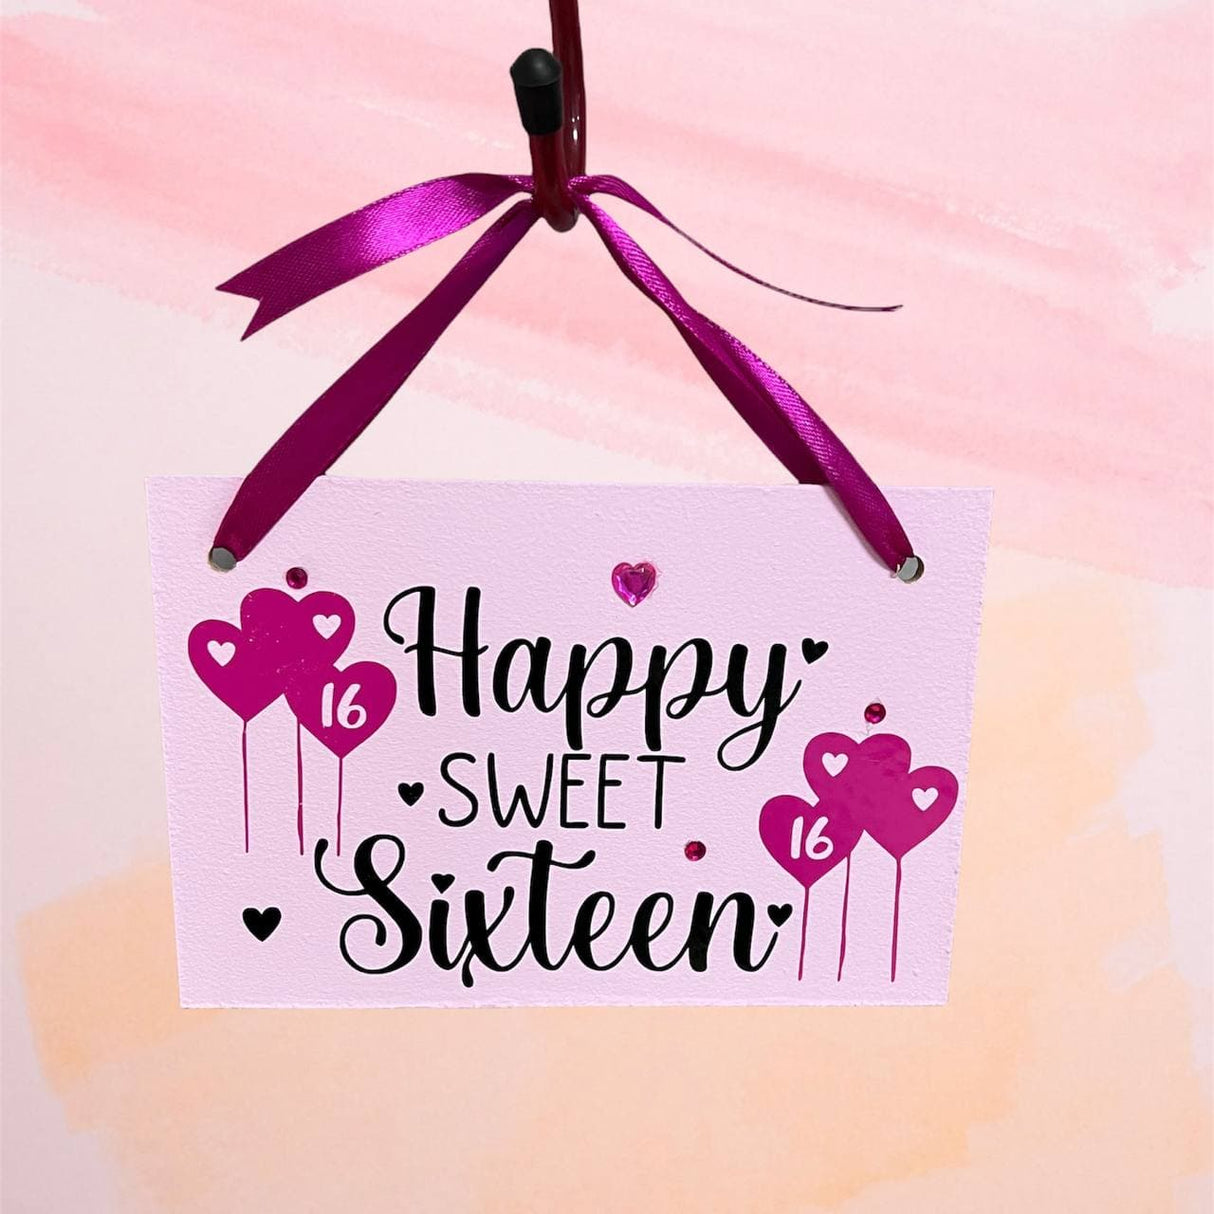 Sweet Sixteen